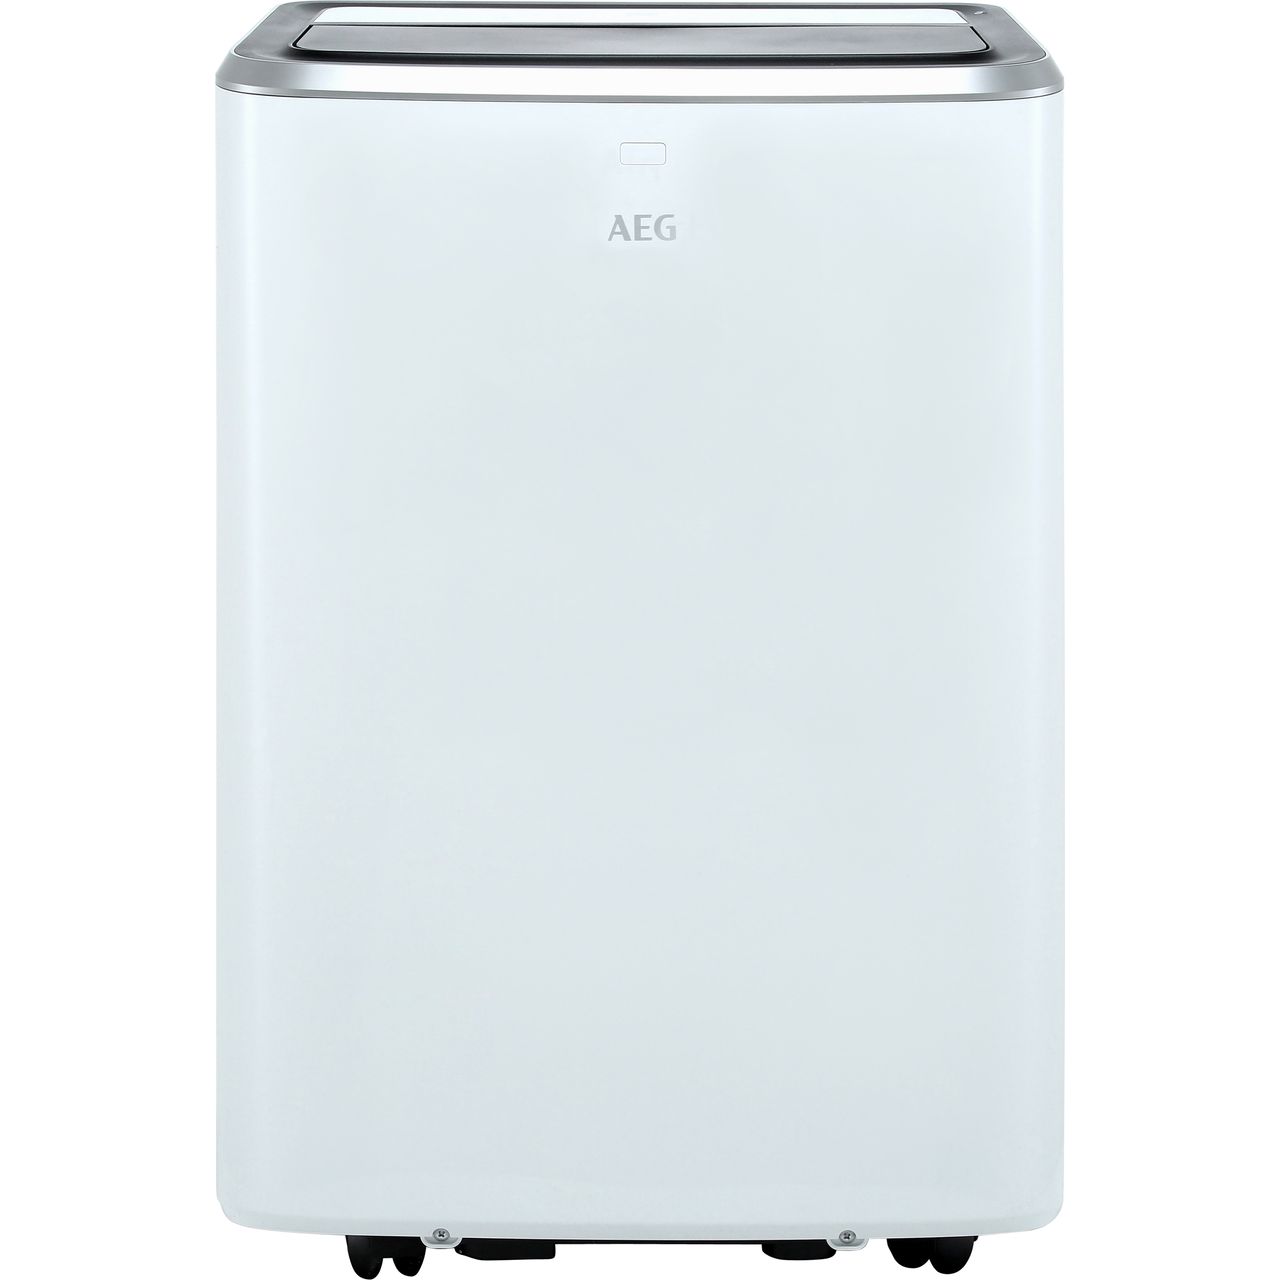 AEG ChillFlex Pro AXP26U338CW Air Conditioning Unit Review